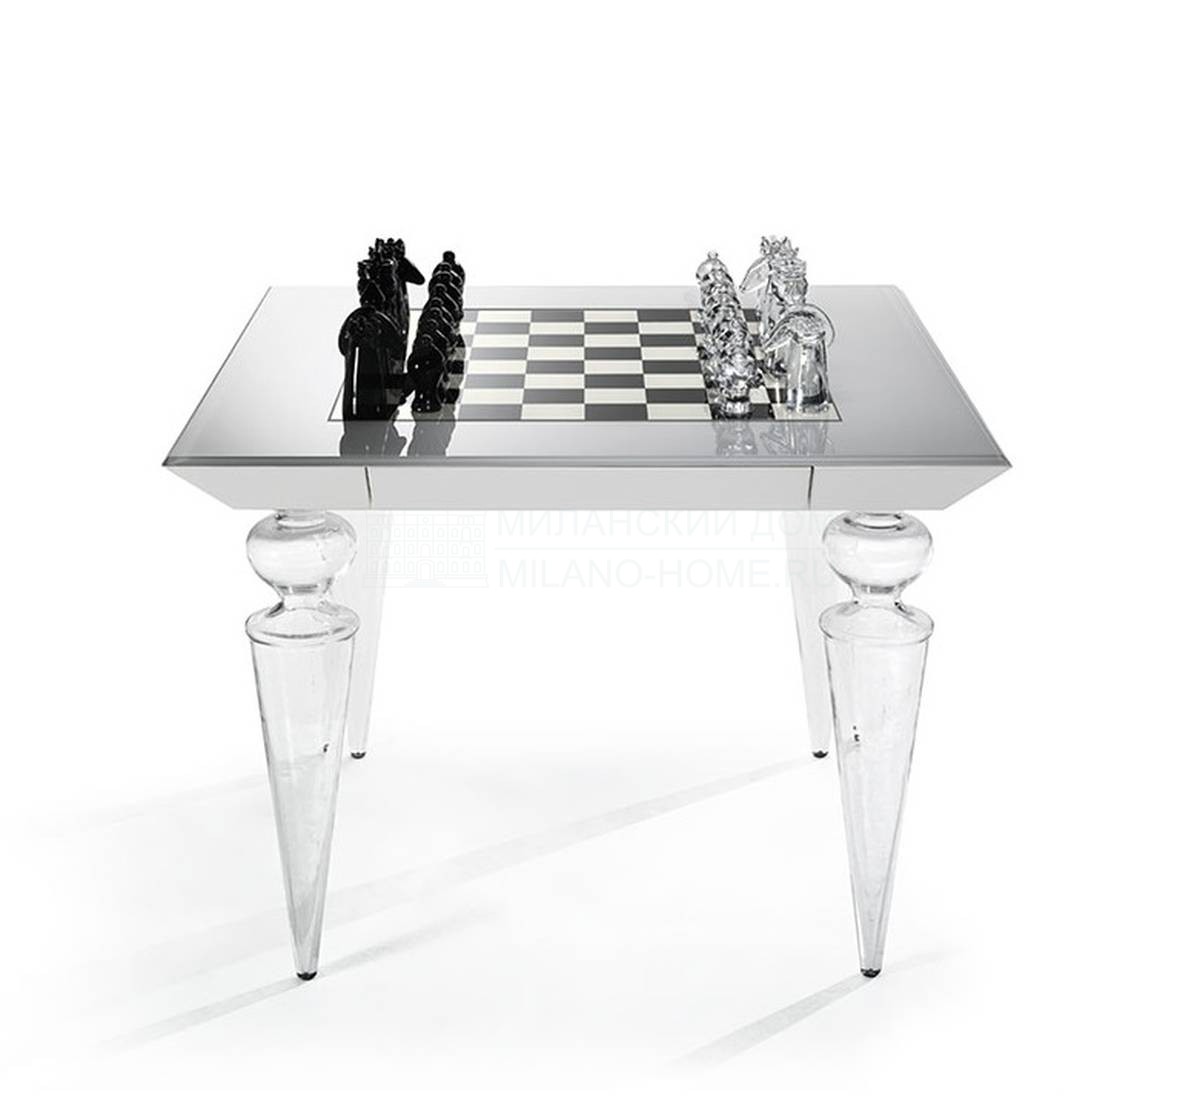 Шахматный стол Scacchi из Италии фабрики REFLEX ANGELO